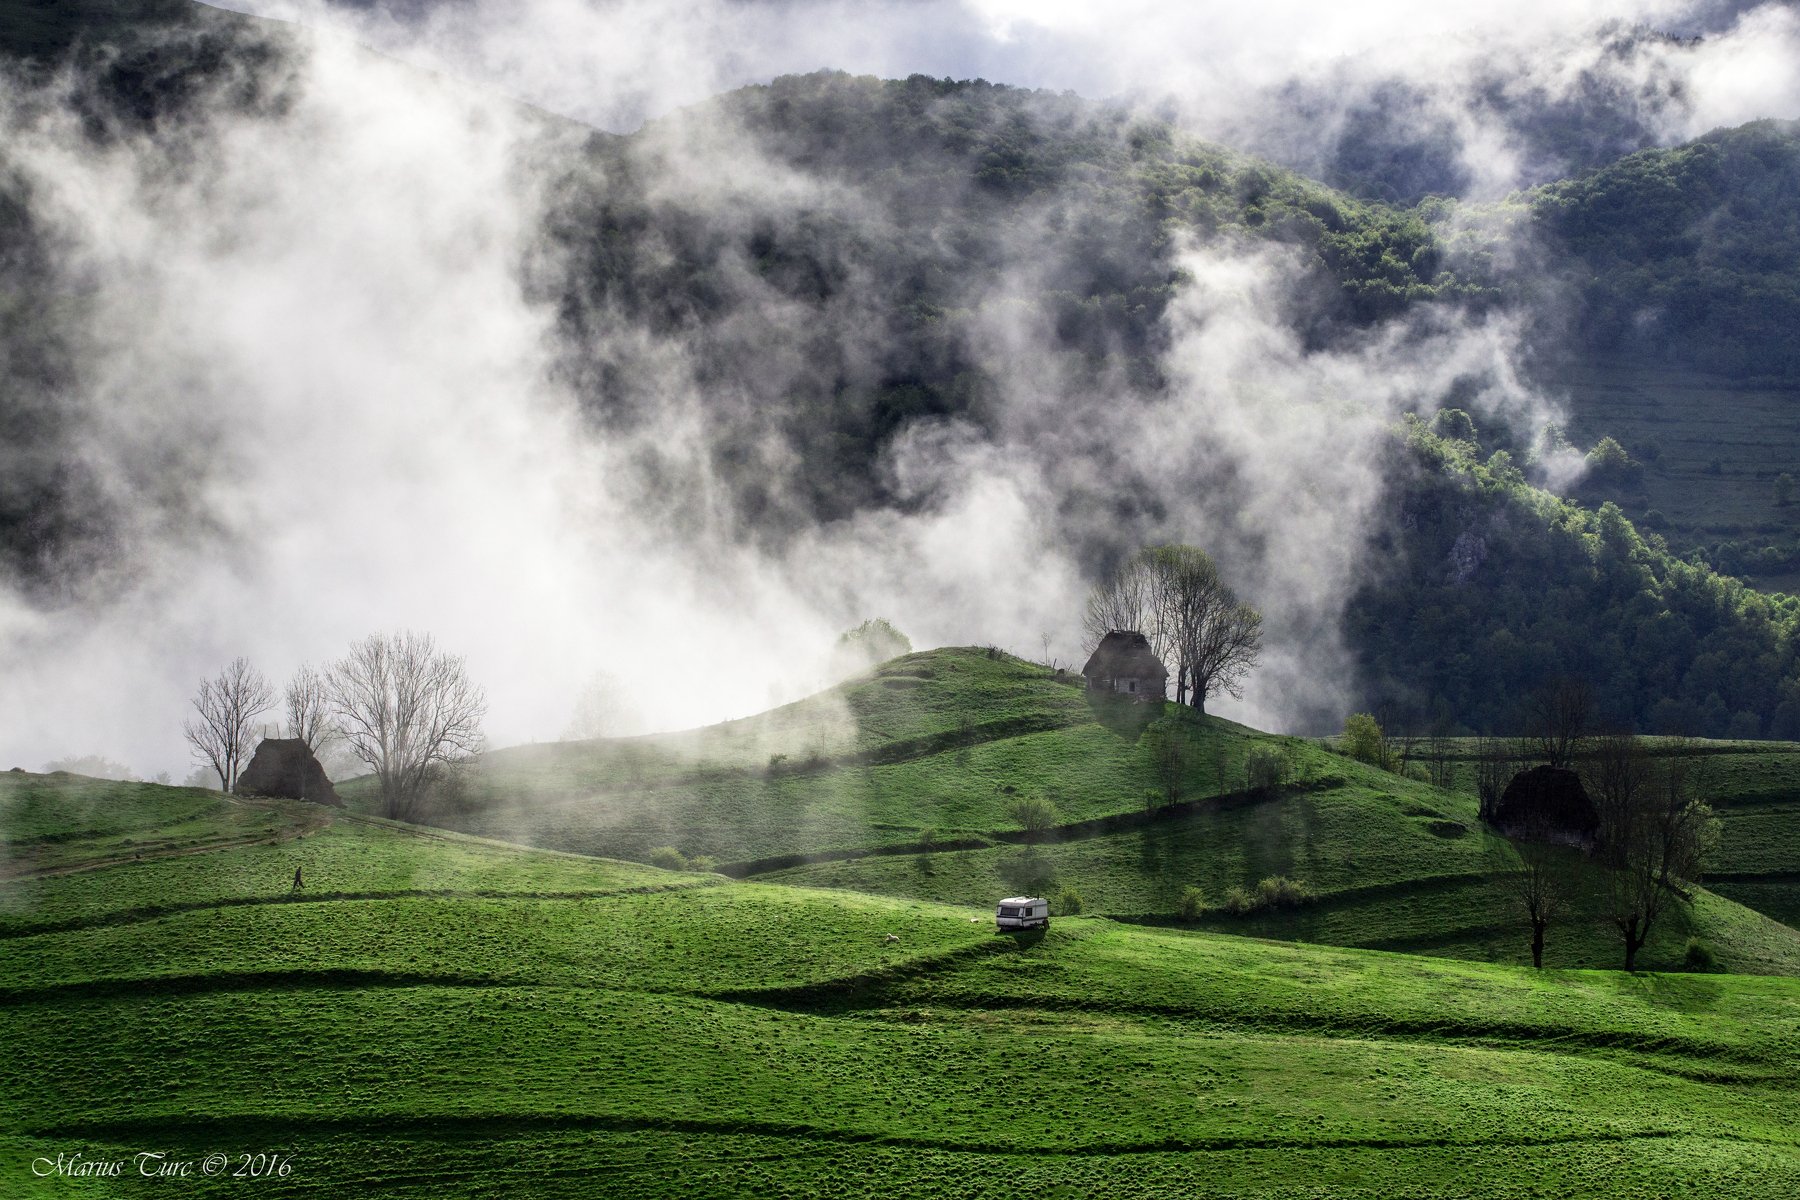 sunday,colors,fog,mist,clouds,nature,house,hills,trees, Marius Turc